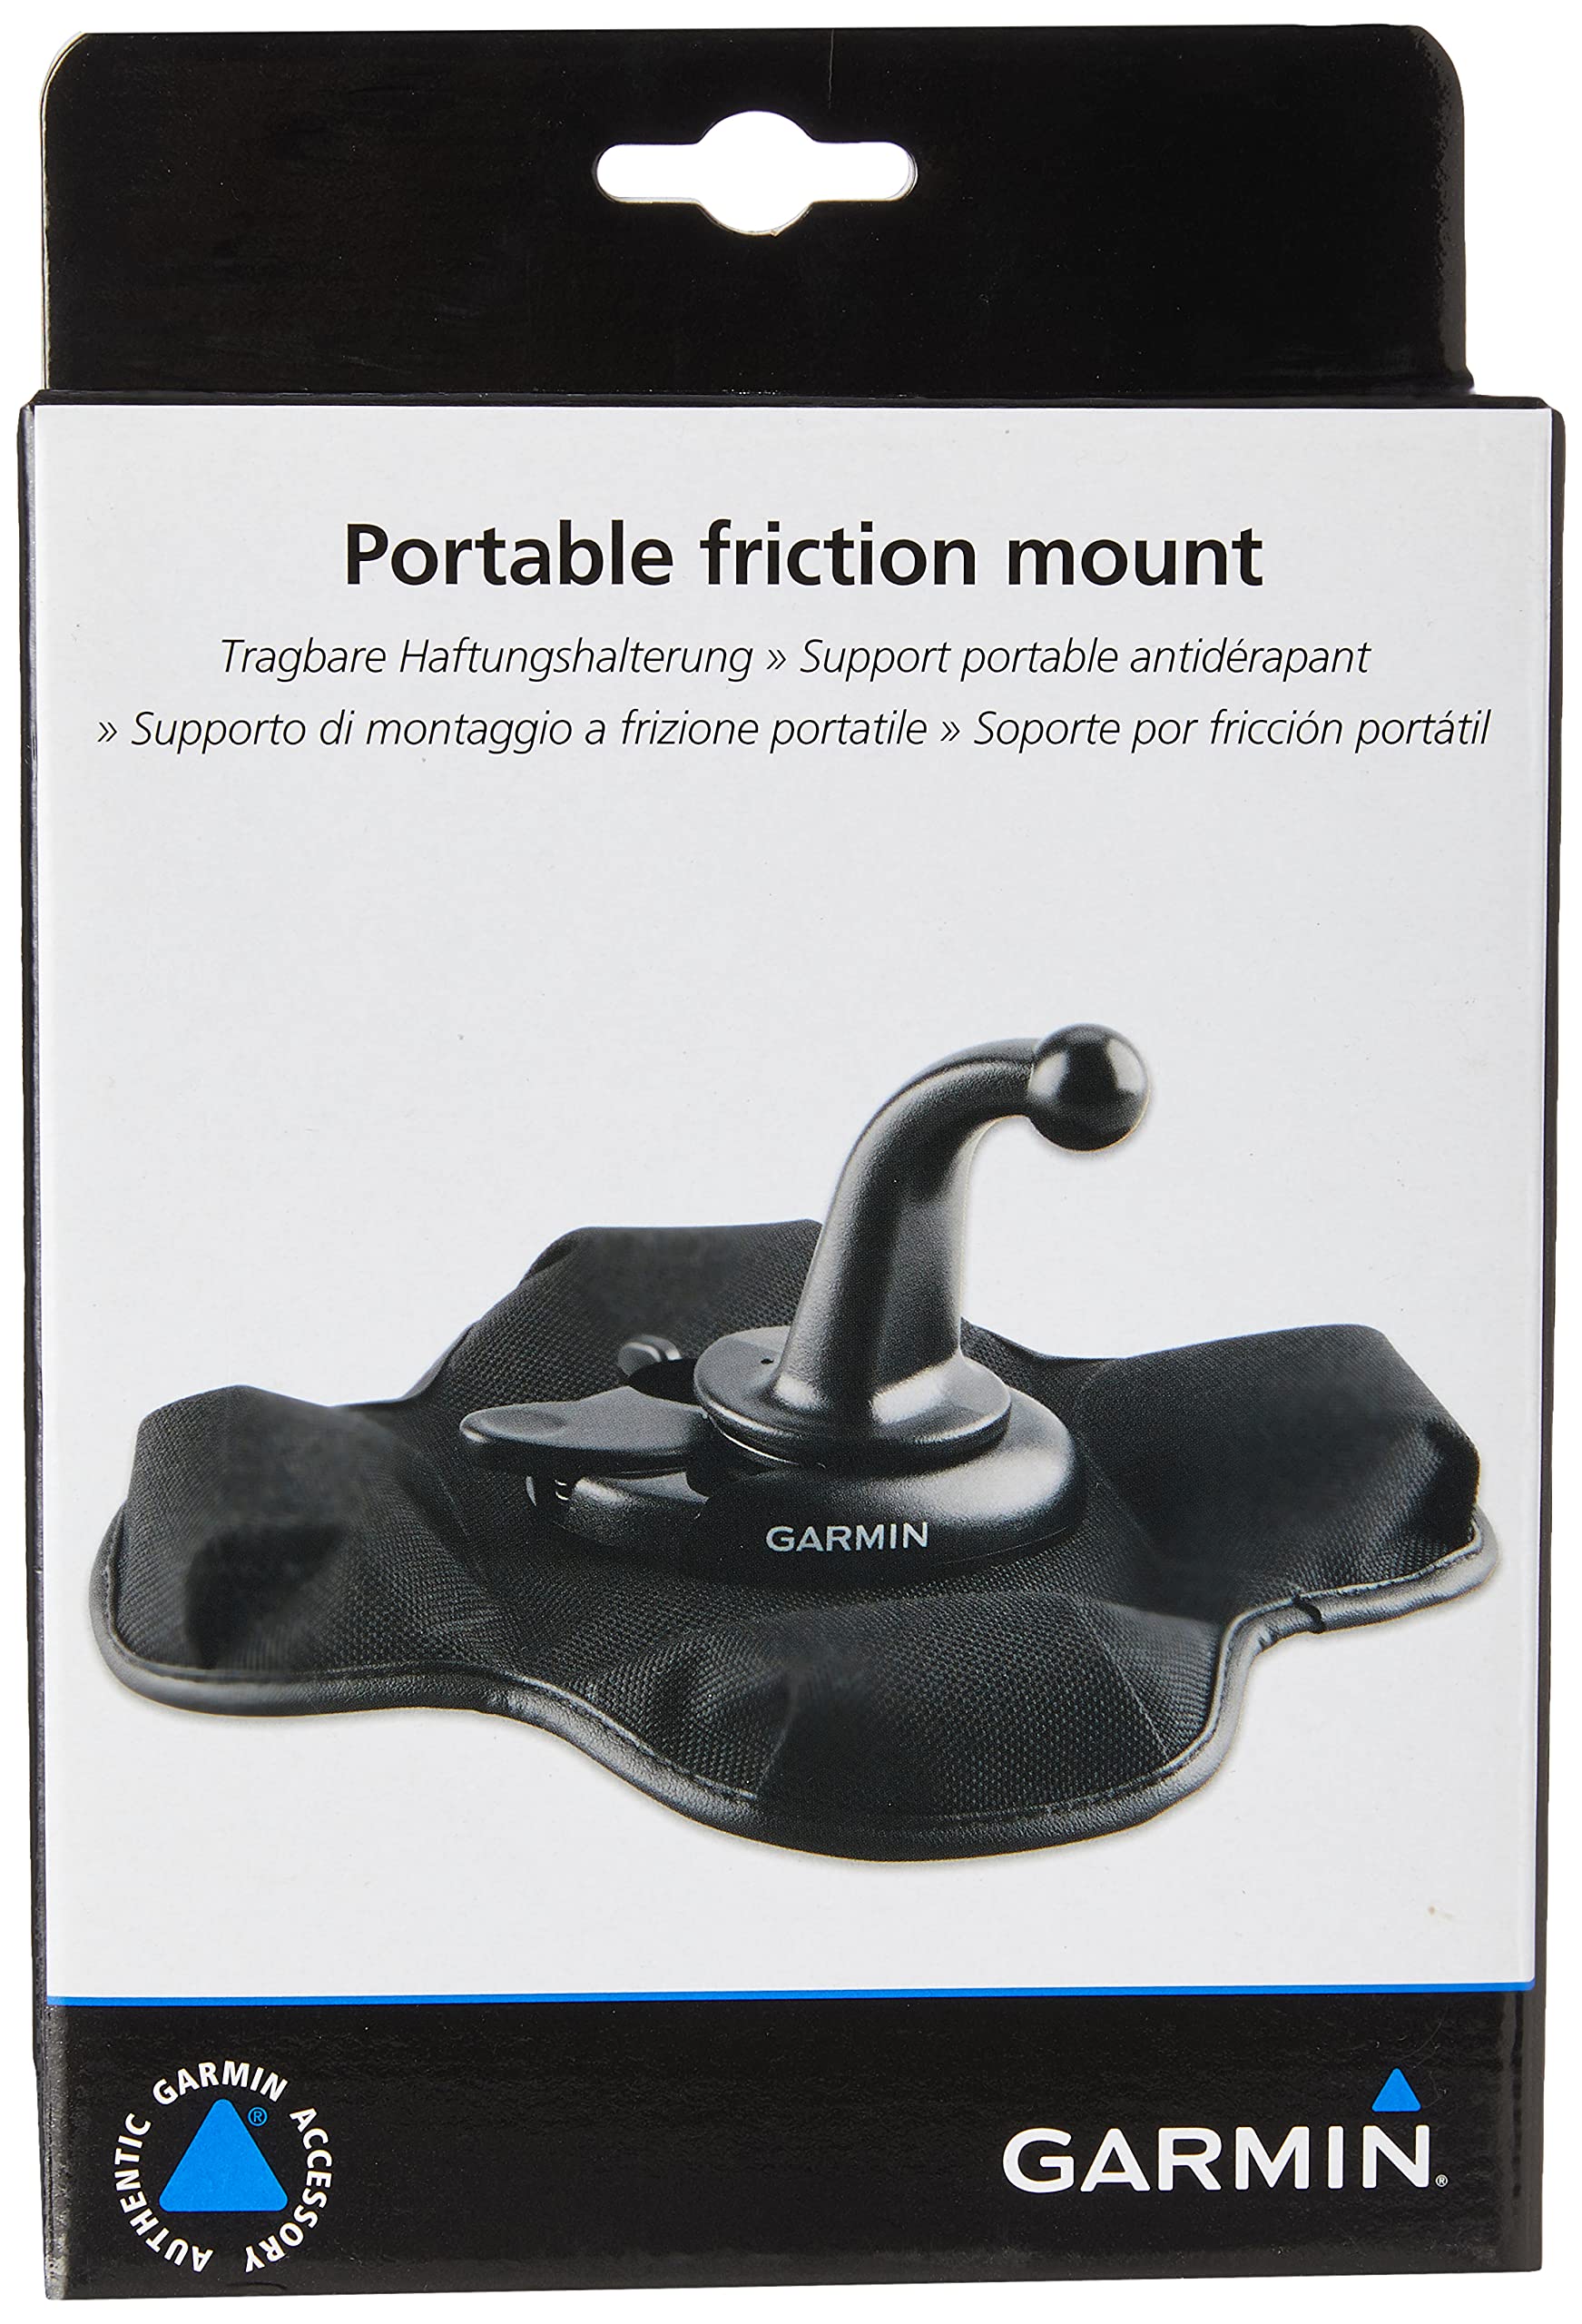 Garmin Portable Friction Mount